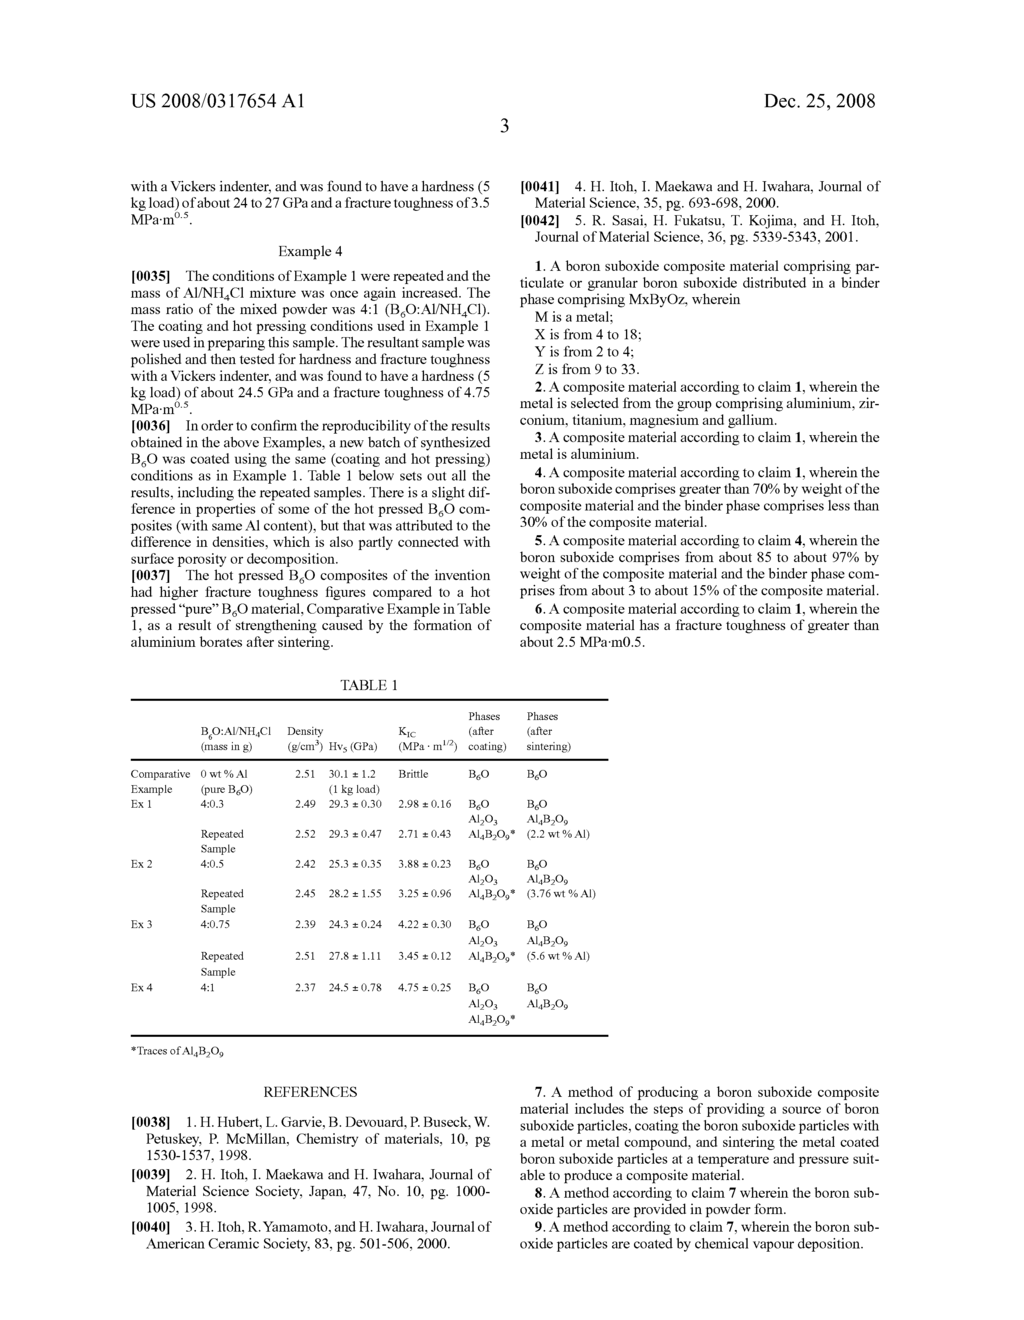 Boron Suboxide Composite Material - diagram, schematic, and image 04